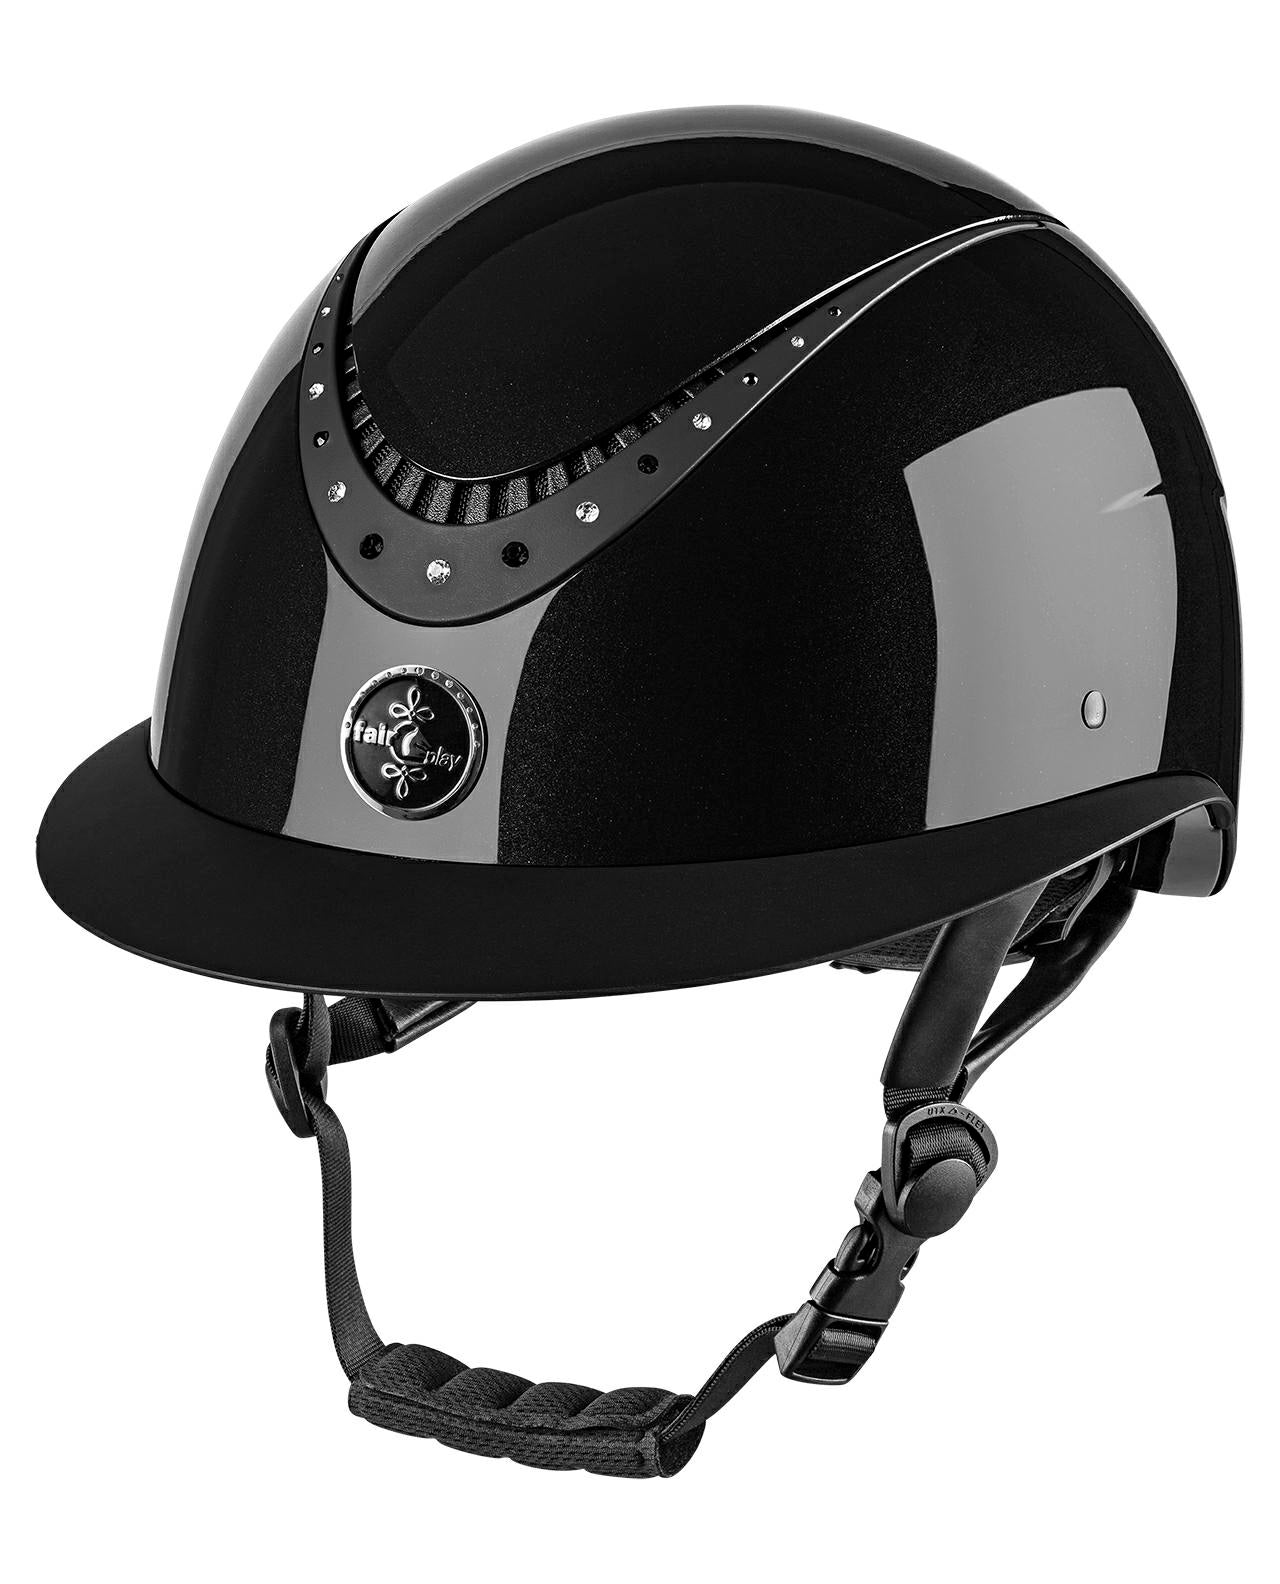 Fairplay Helmet Apoleus shiny